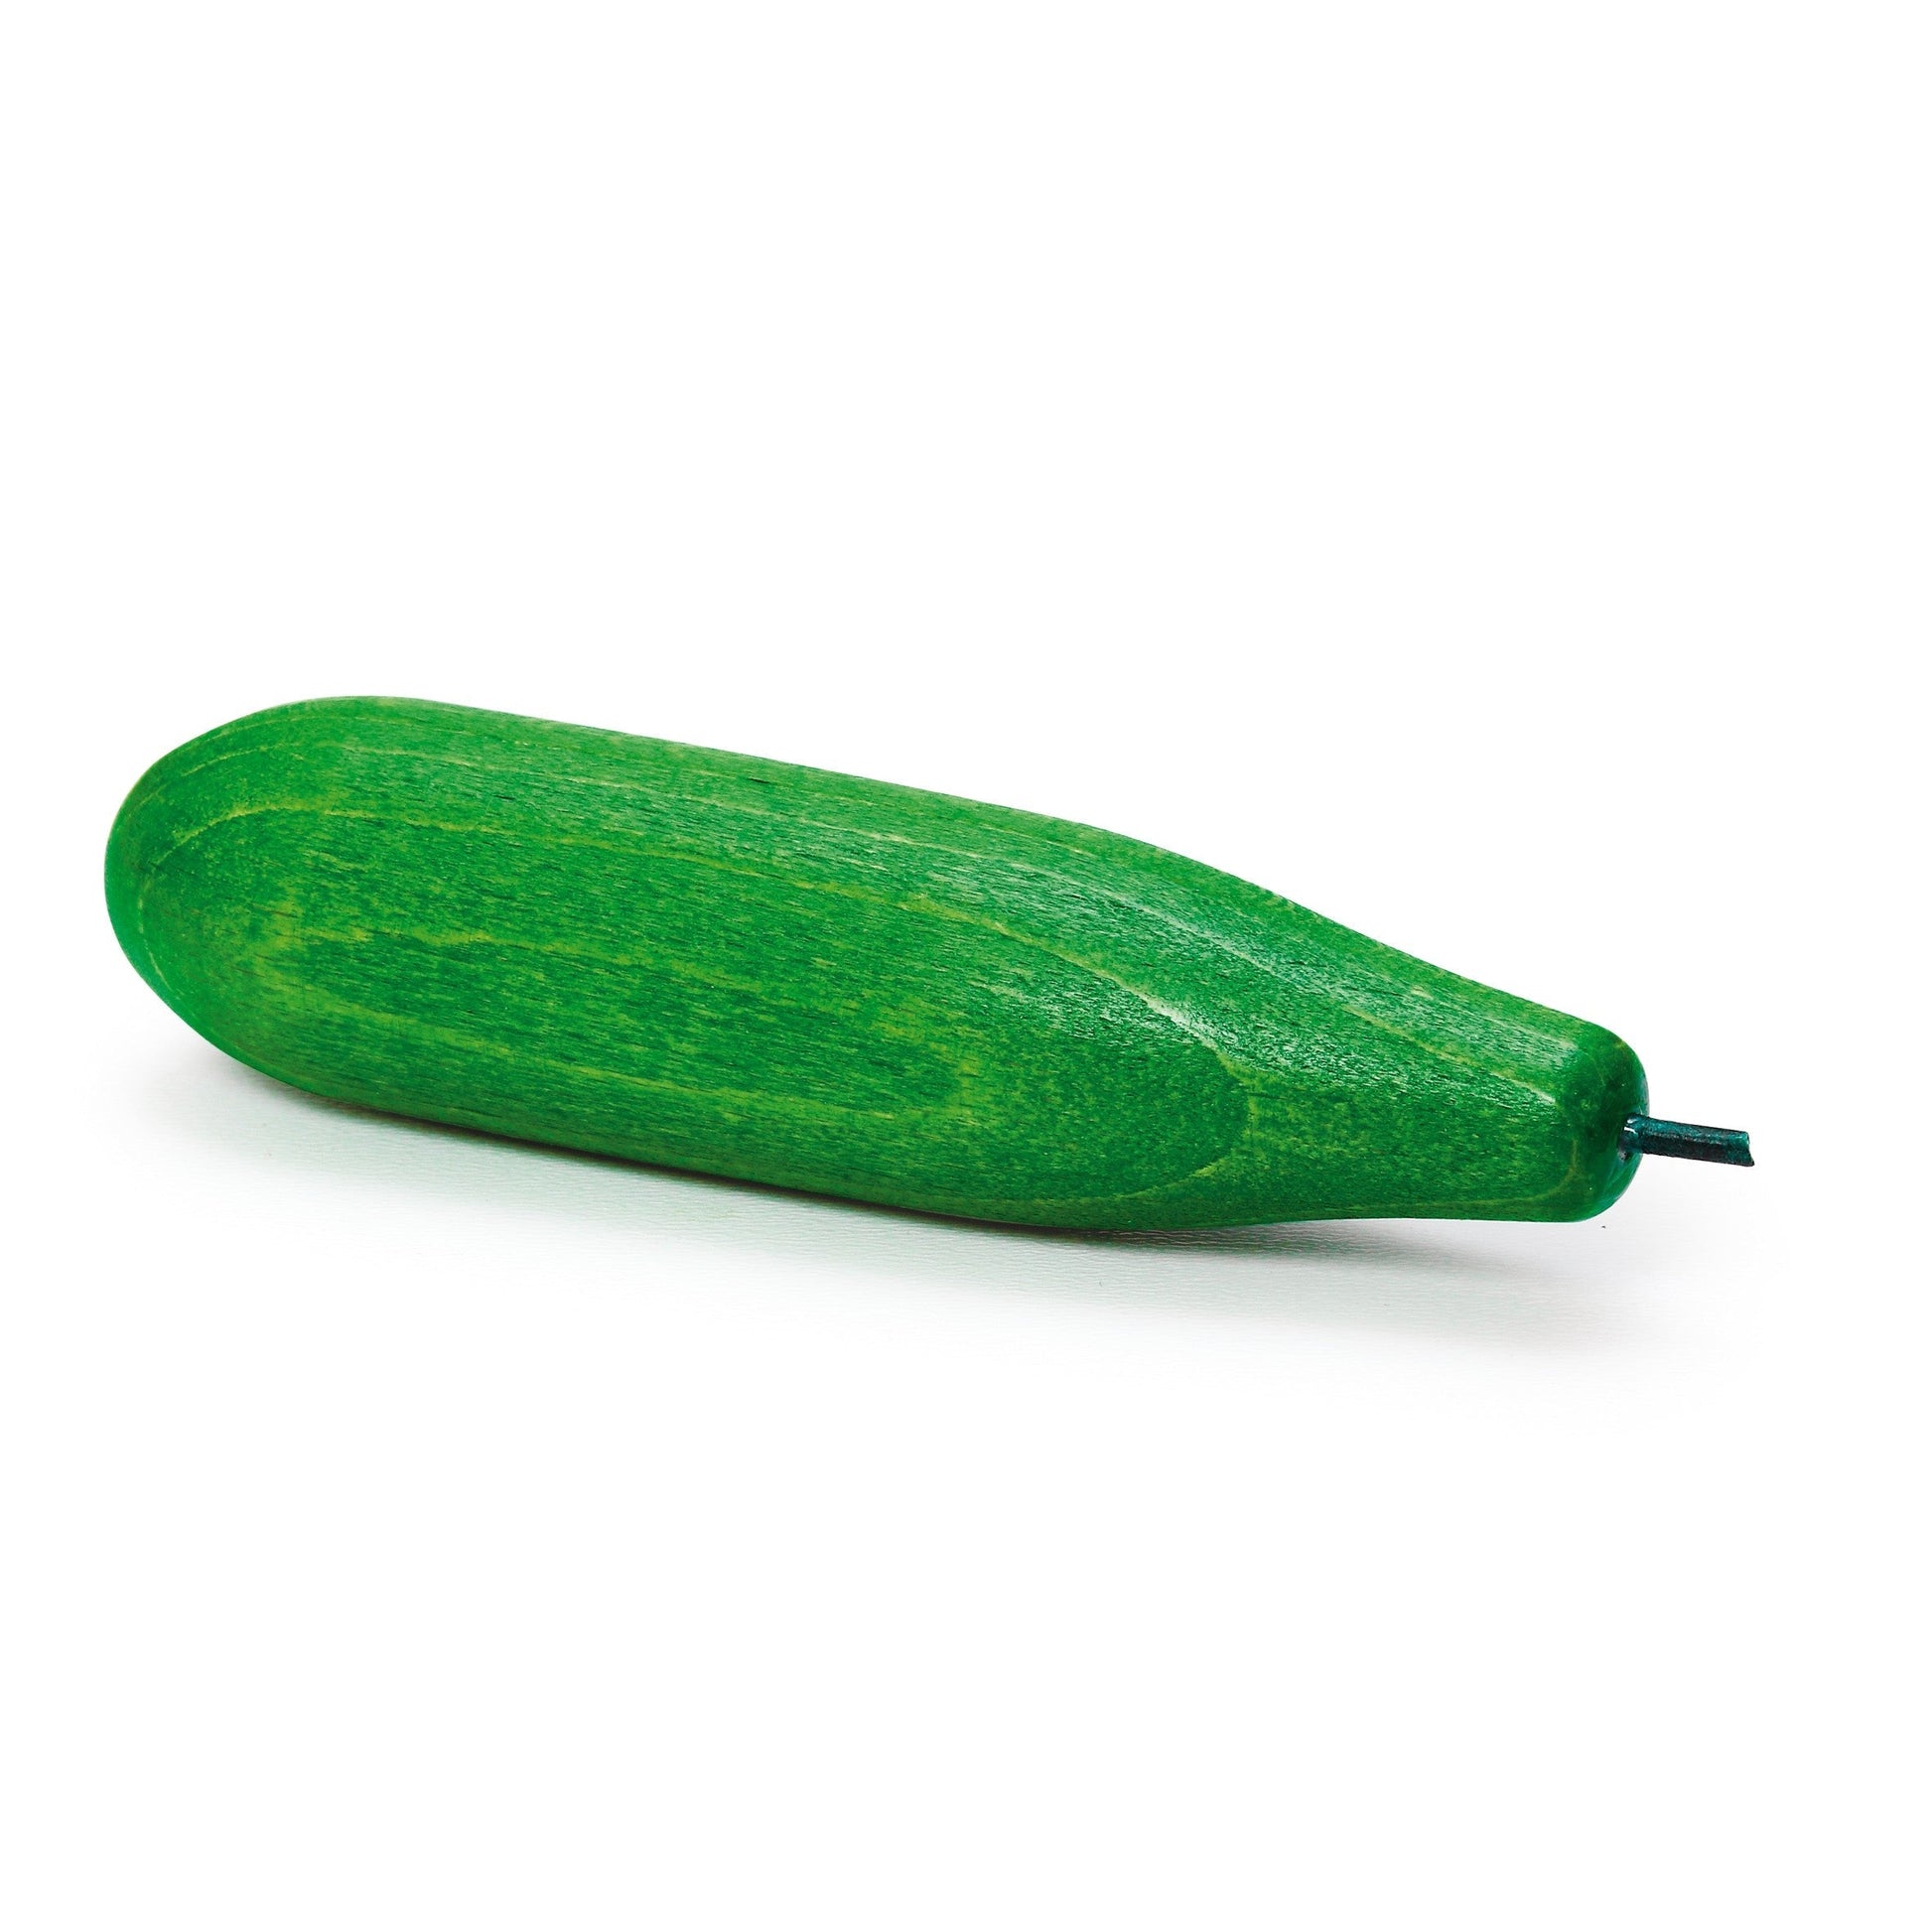 Erzi Cucumber - Wooden Play Food